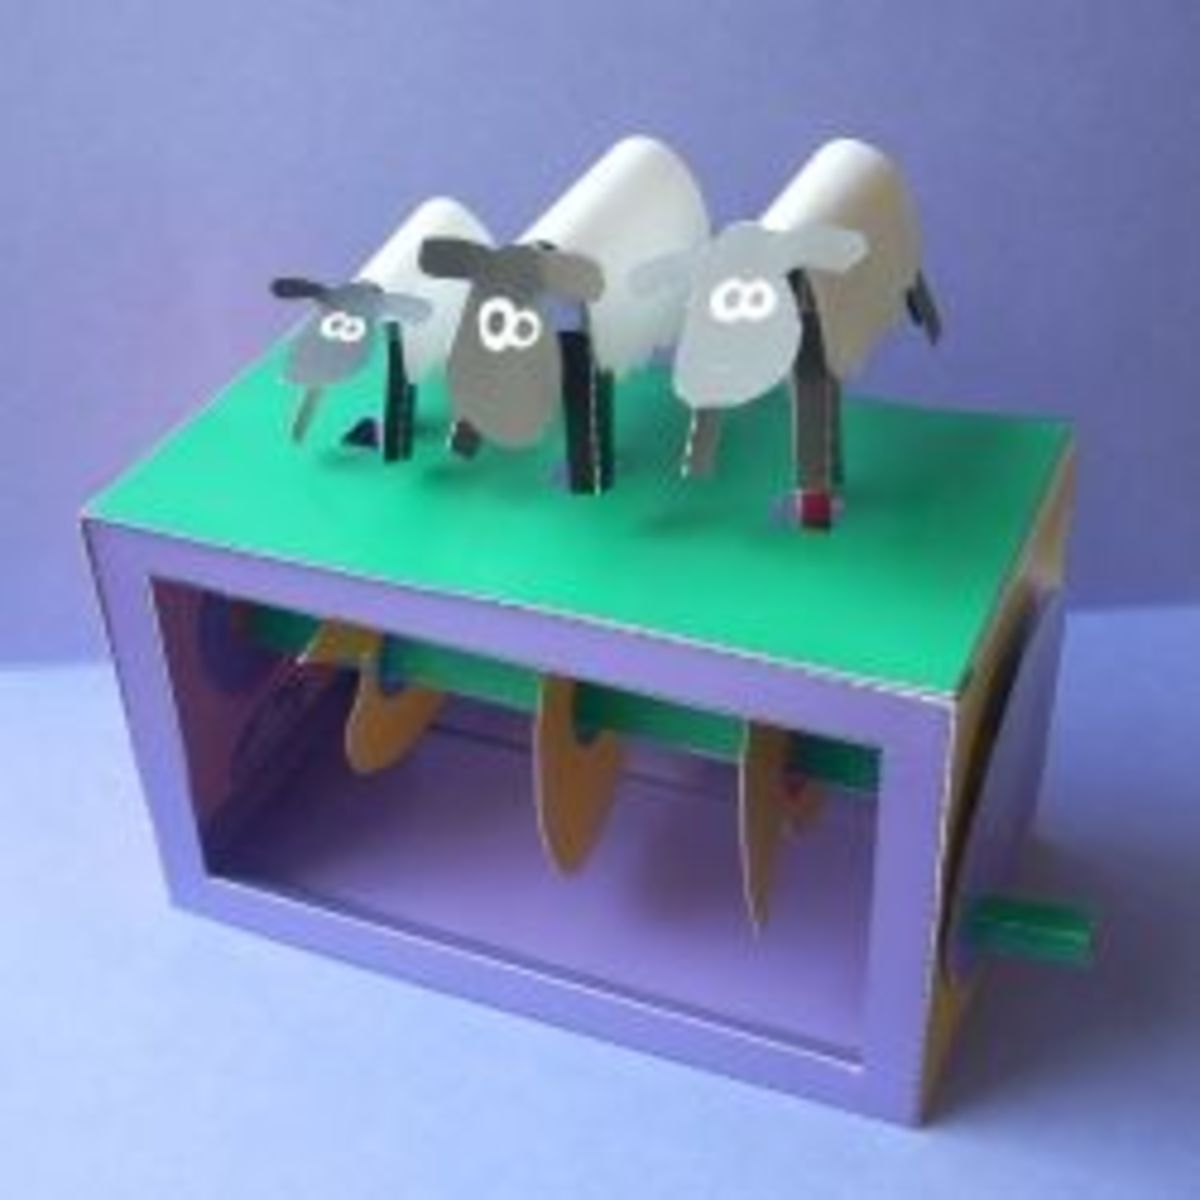 vijand Speeltoestellen Verlichten Making Paper Automata Toys With Rob Ives's Fabulous Book - FeltMagnet